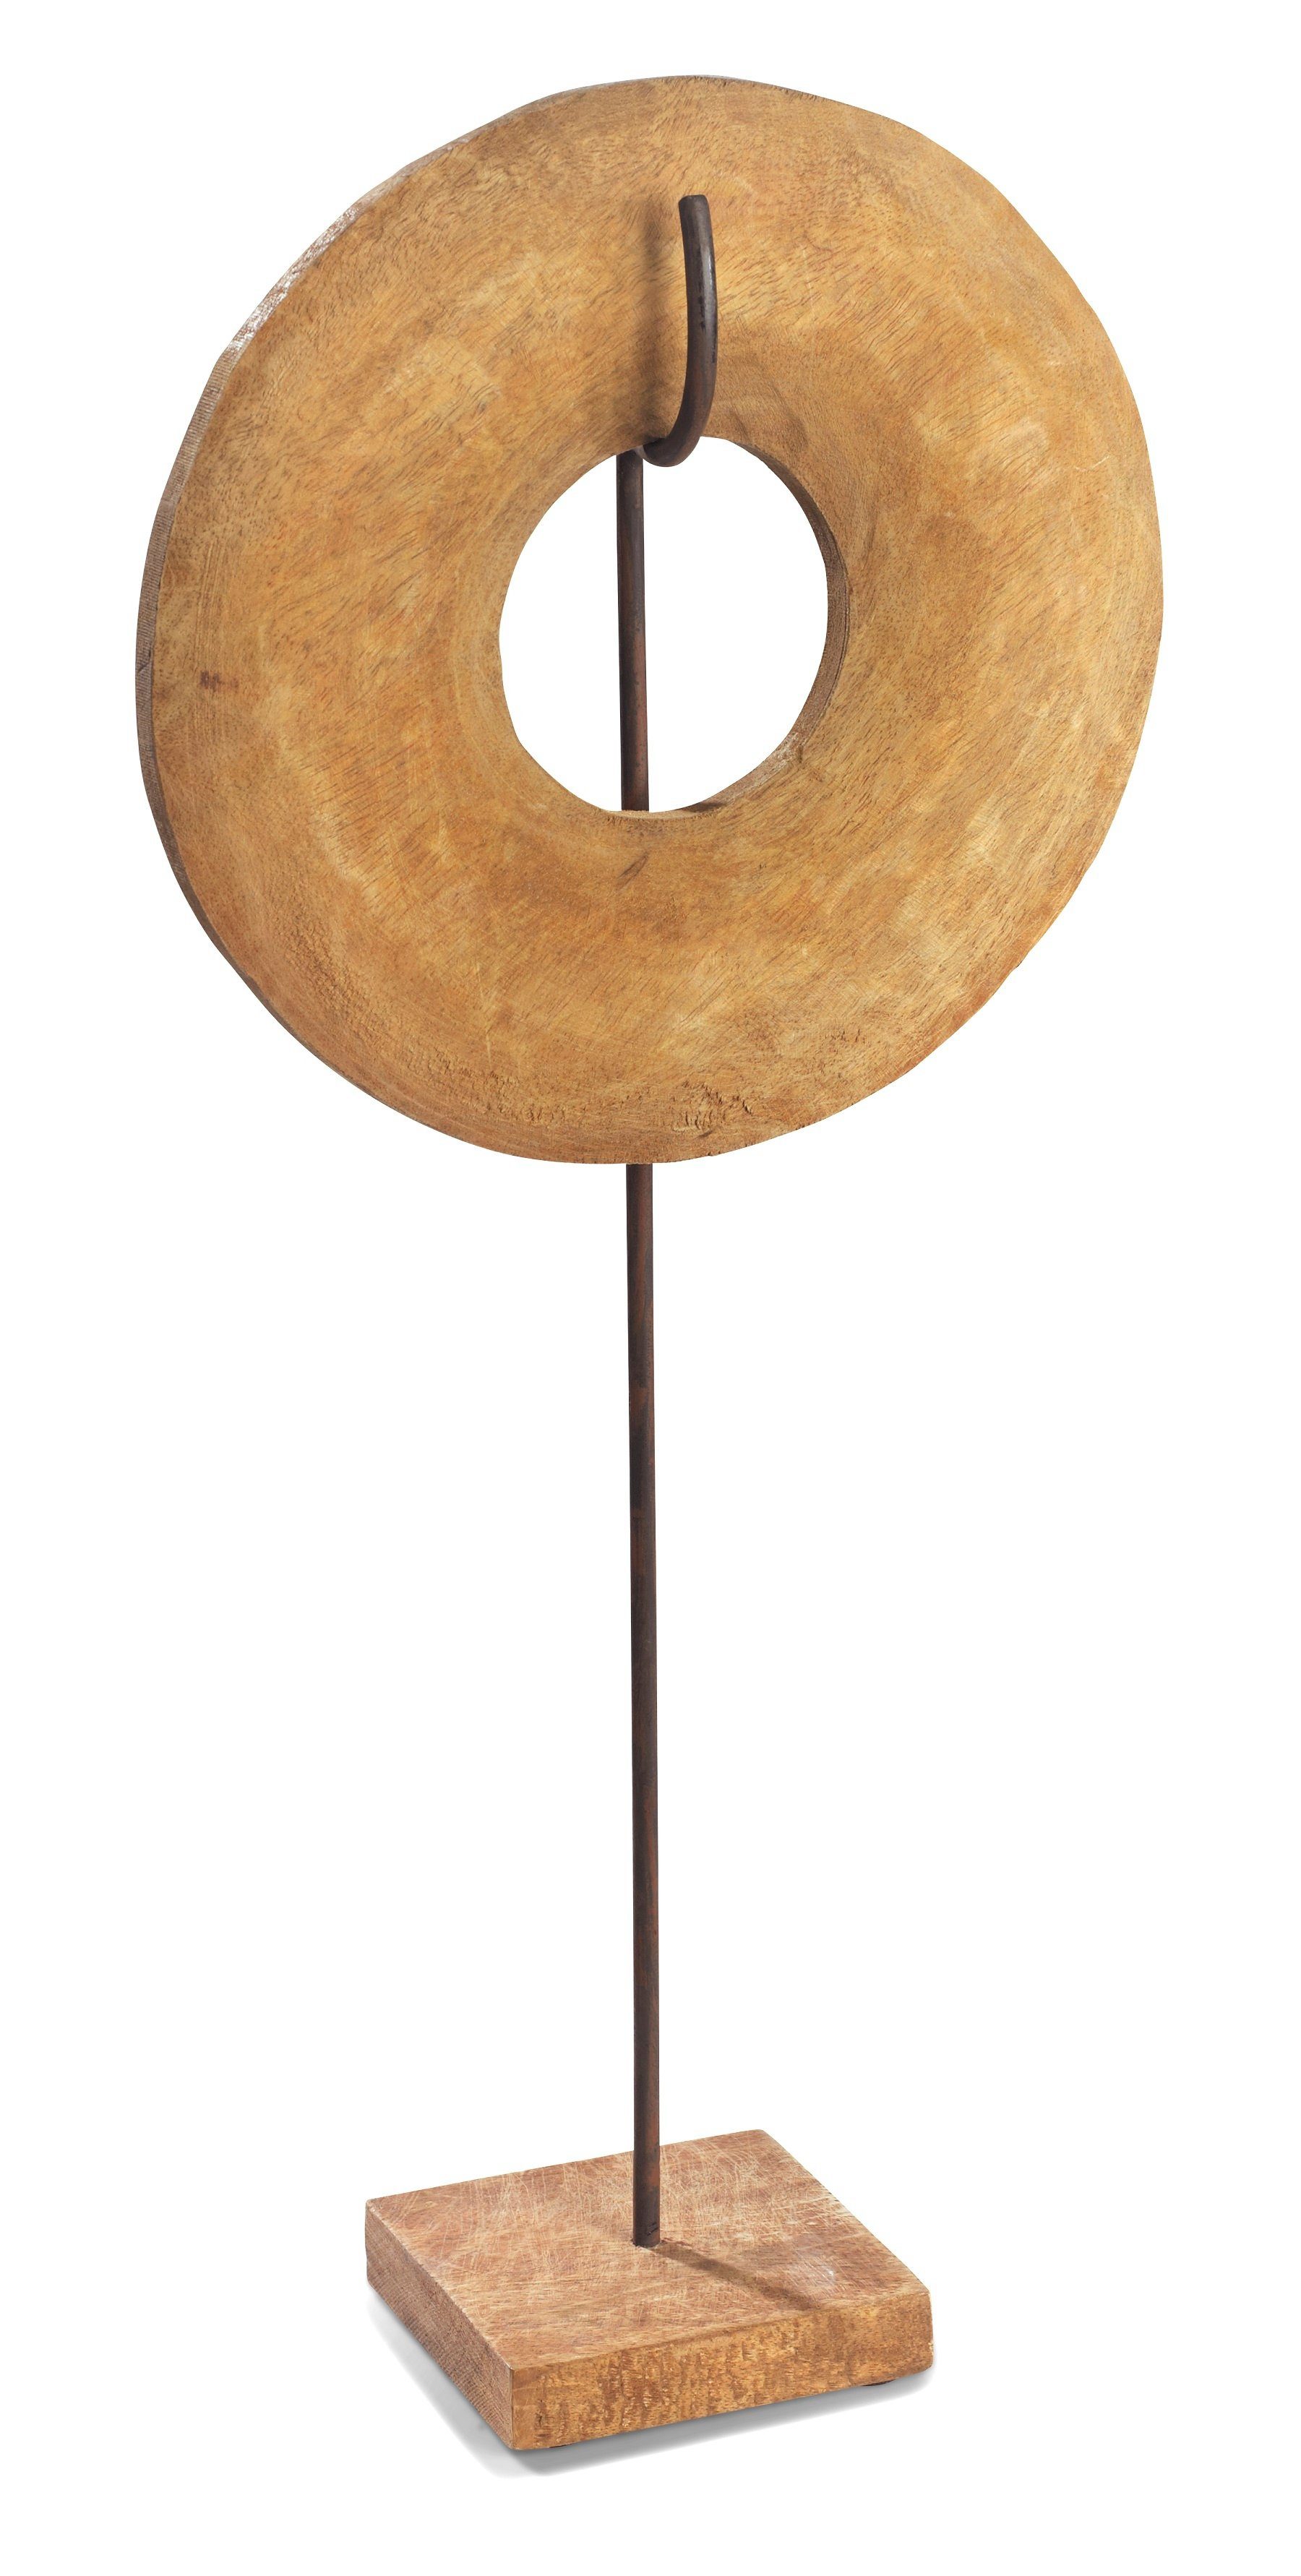 Holz, Skulptur Wanddeko, Moritz Holzdeko 65x29x12cm, Kreis Donut Dekoobjekt Tischdeko, groß Fensterdeko, Skulptur Unendlichkeit